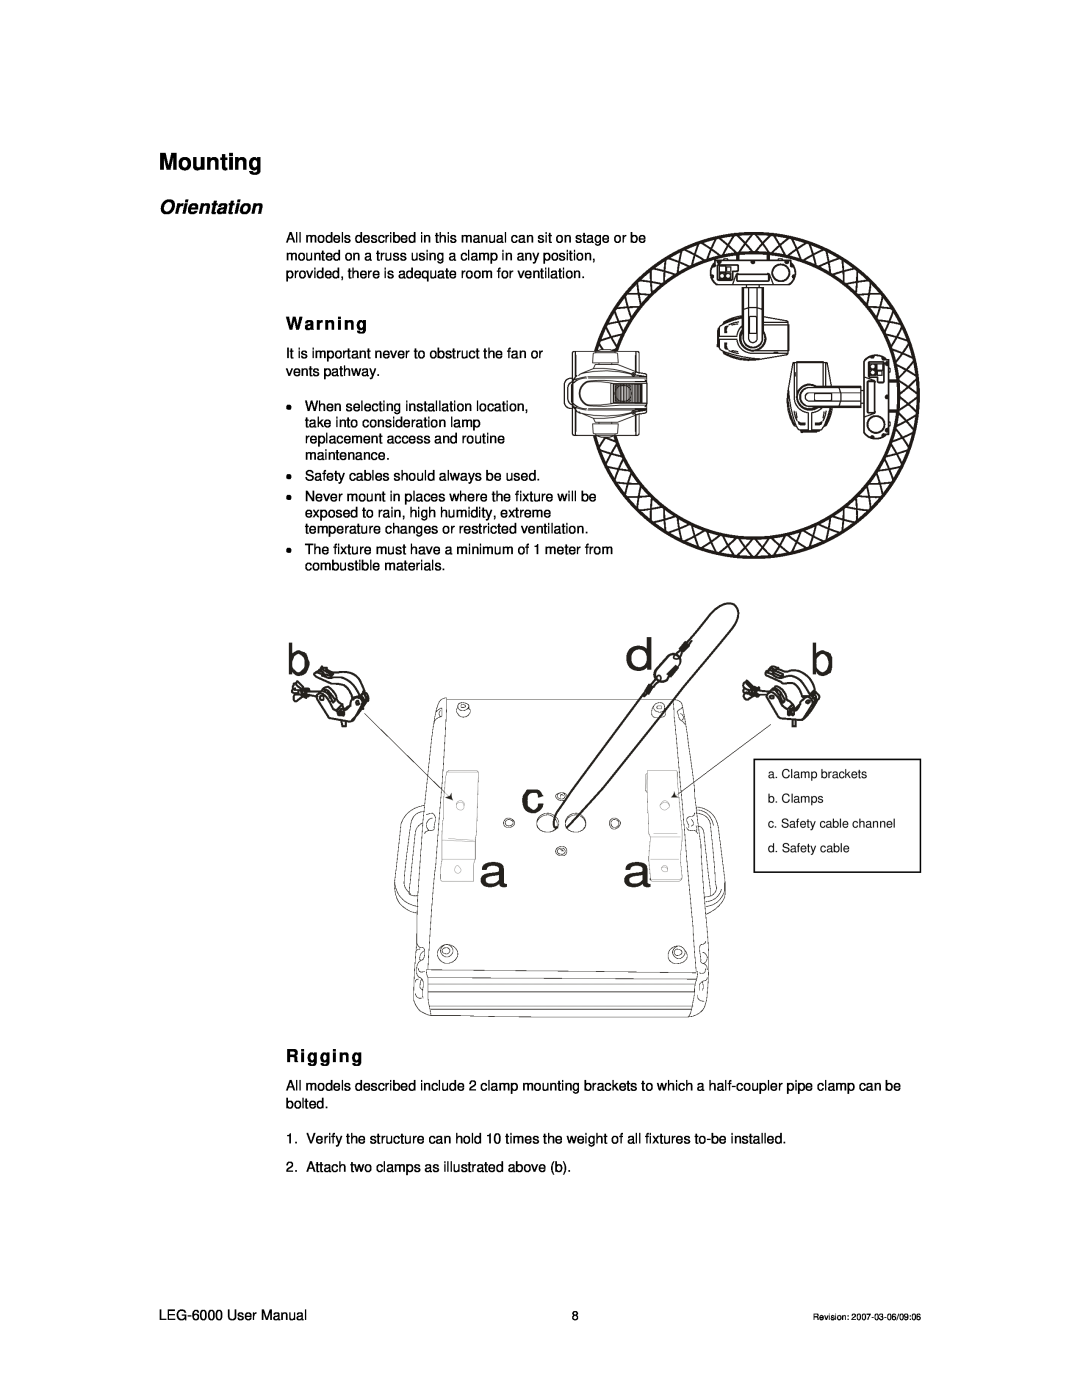 Chauvet LEG-6000, 6000X user manual Mounting, Orientation, Rigging, d a a 